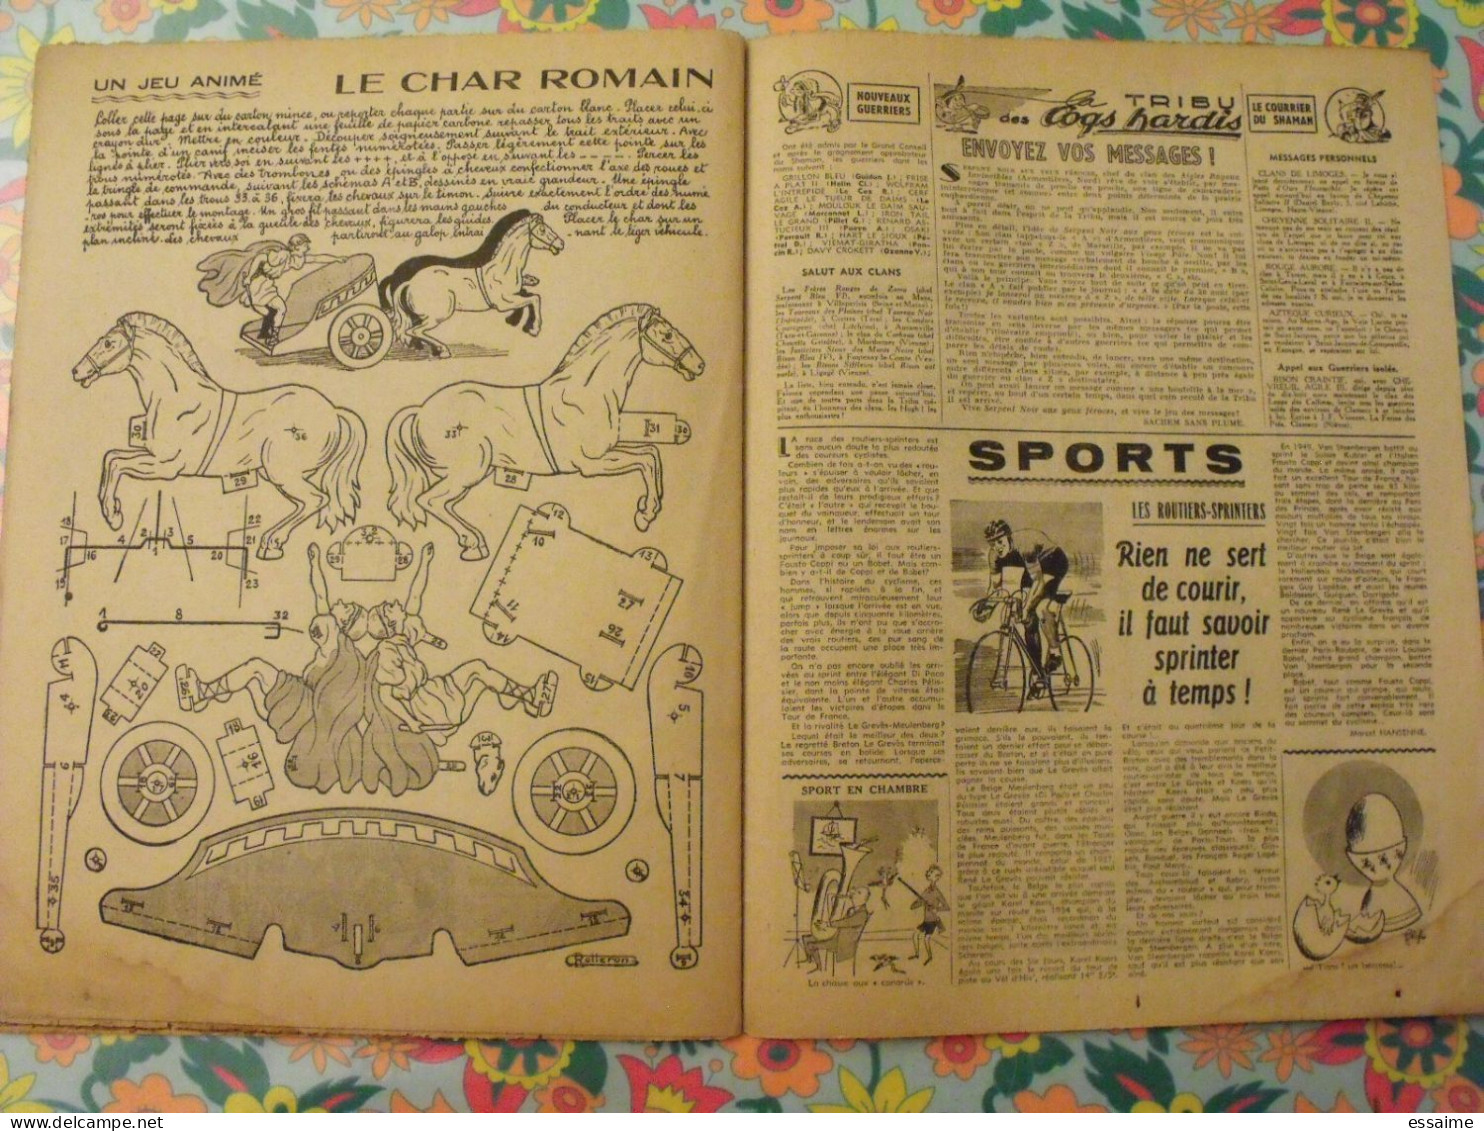 10 numéros de Coq Hardi de 1951. Sitting Bull, flamberge, roland, foufou, baby baluchon mat. A redécouvrir